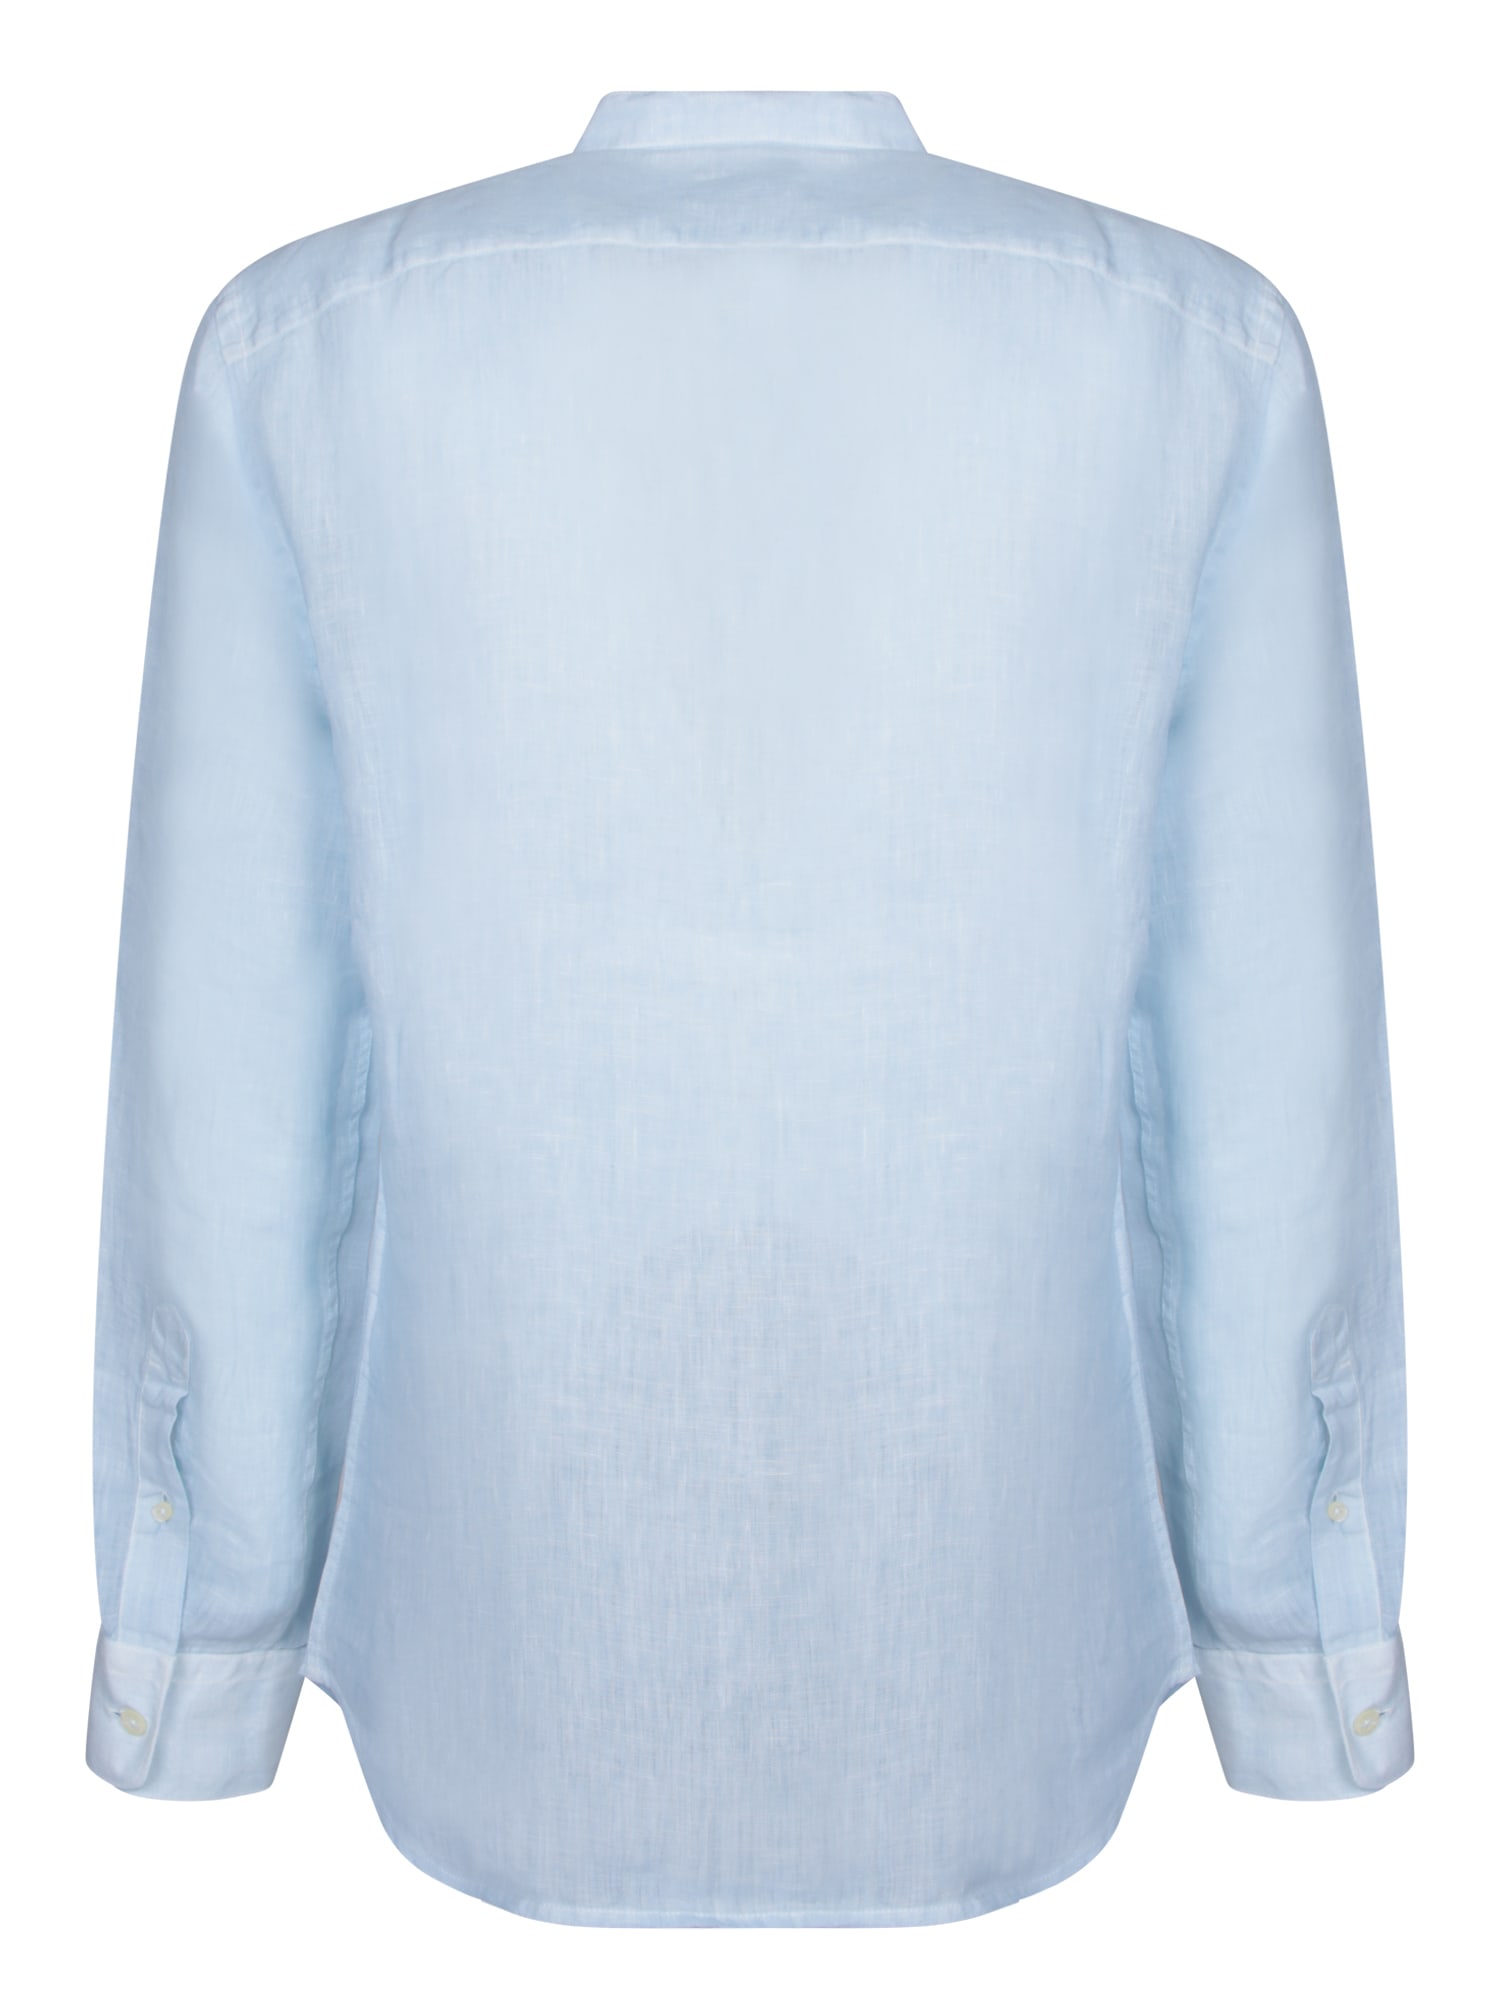 Shop 120% Lino Sky Blue Mandarin Collar Shirt